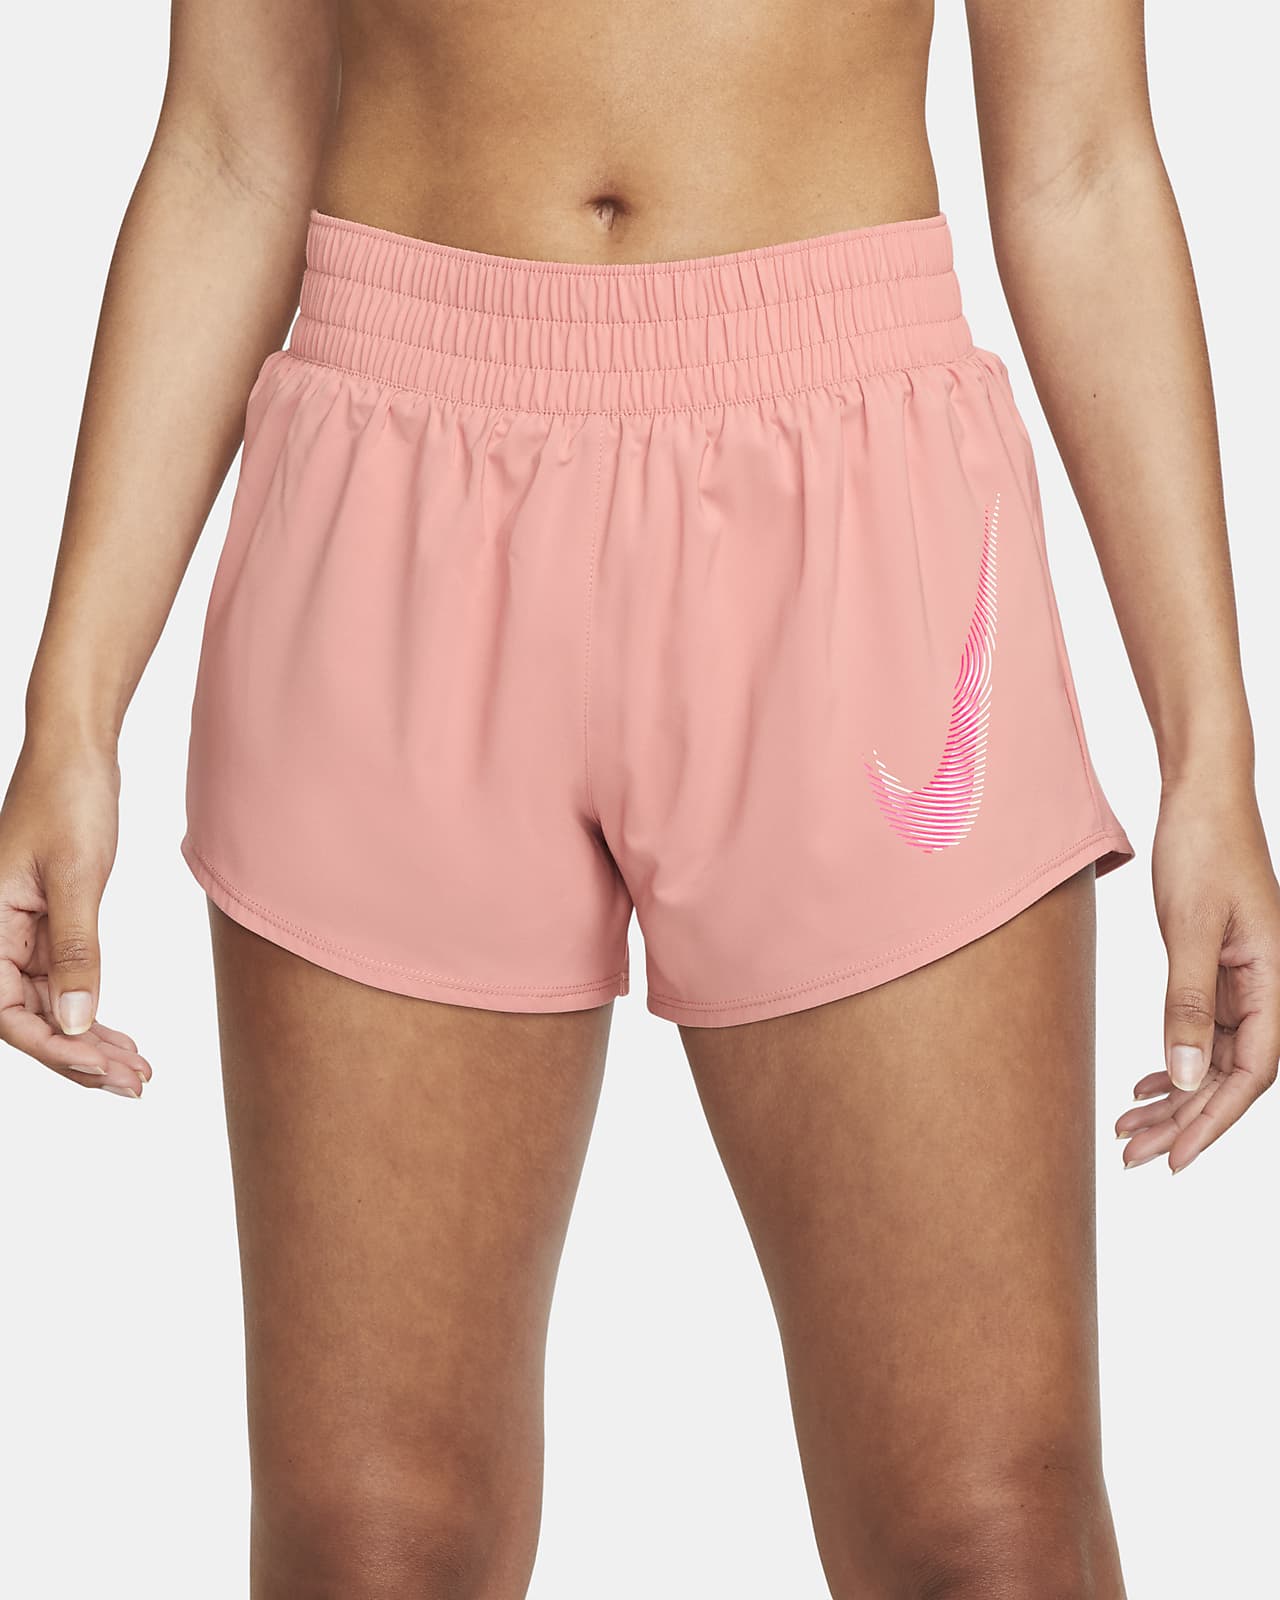 Women's Nike Dri-Fit Running Shorts